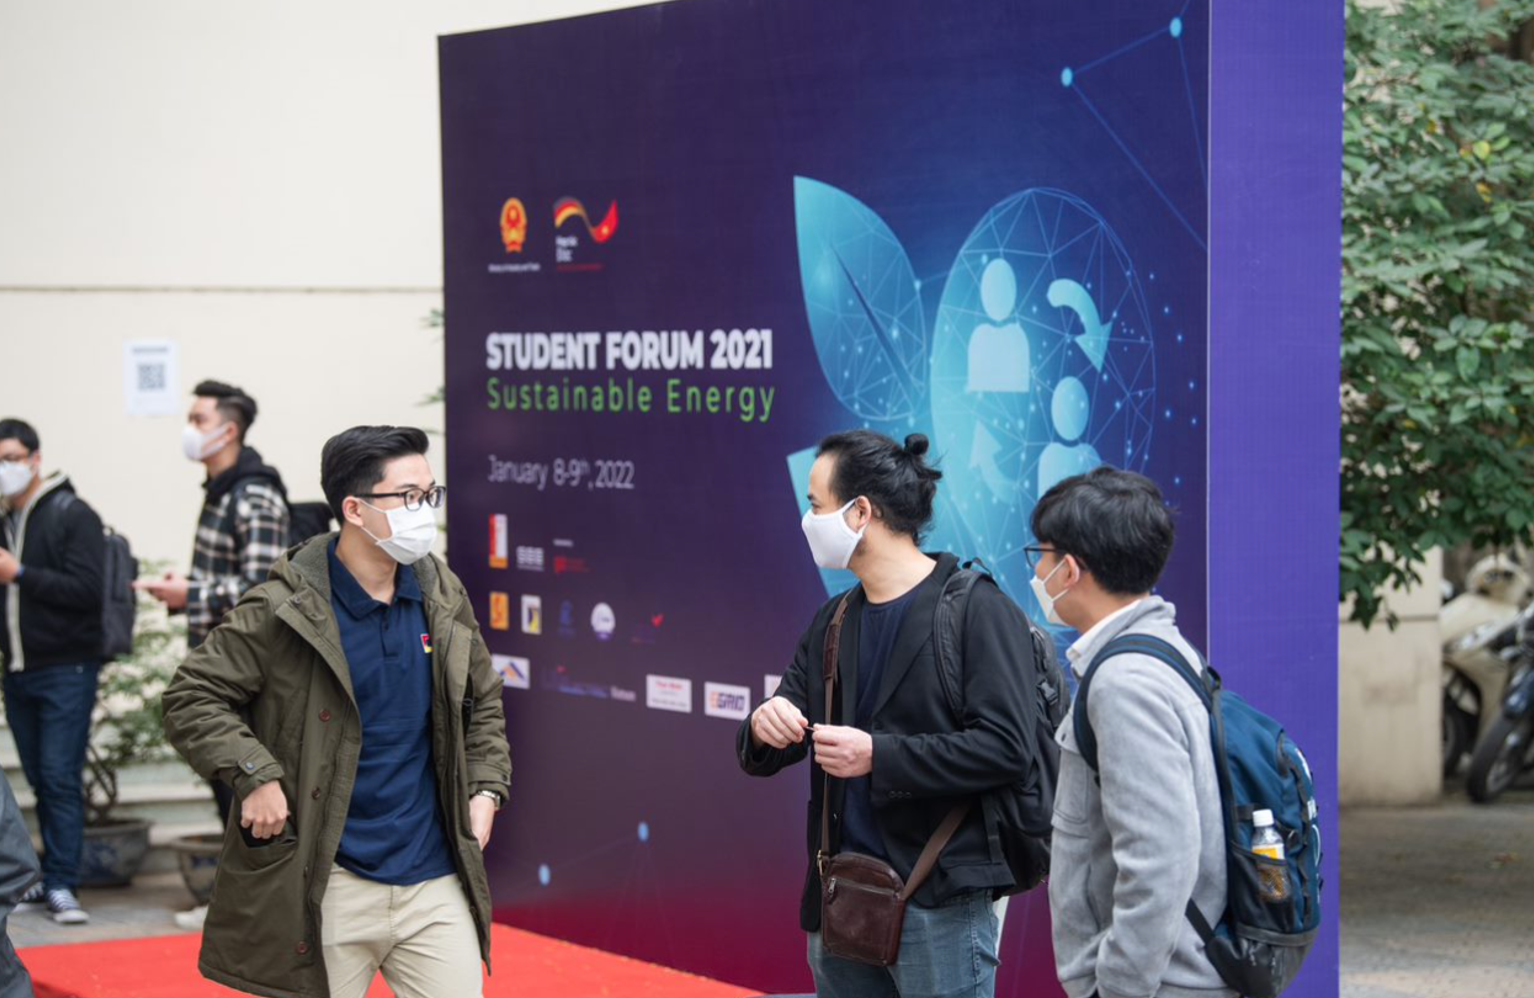 Students exchanged at Student Forum 2021 (Source: GIZ Viet Nam)